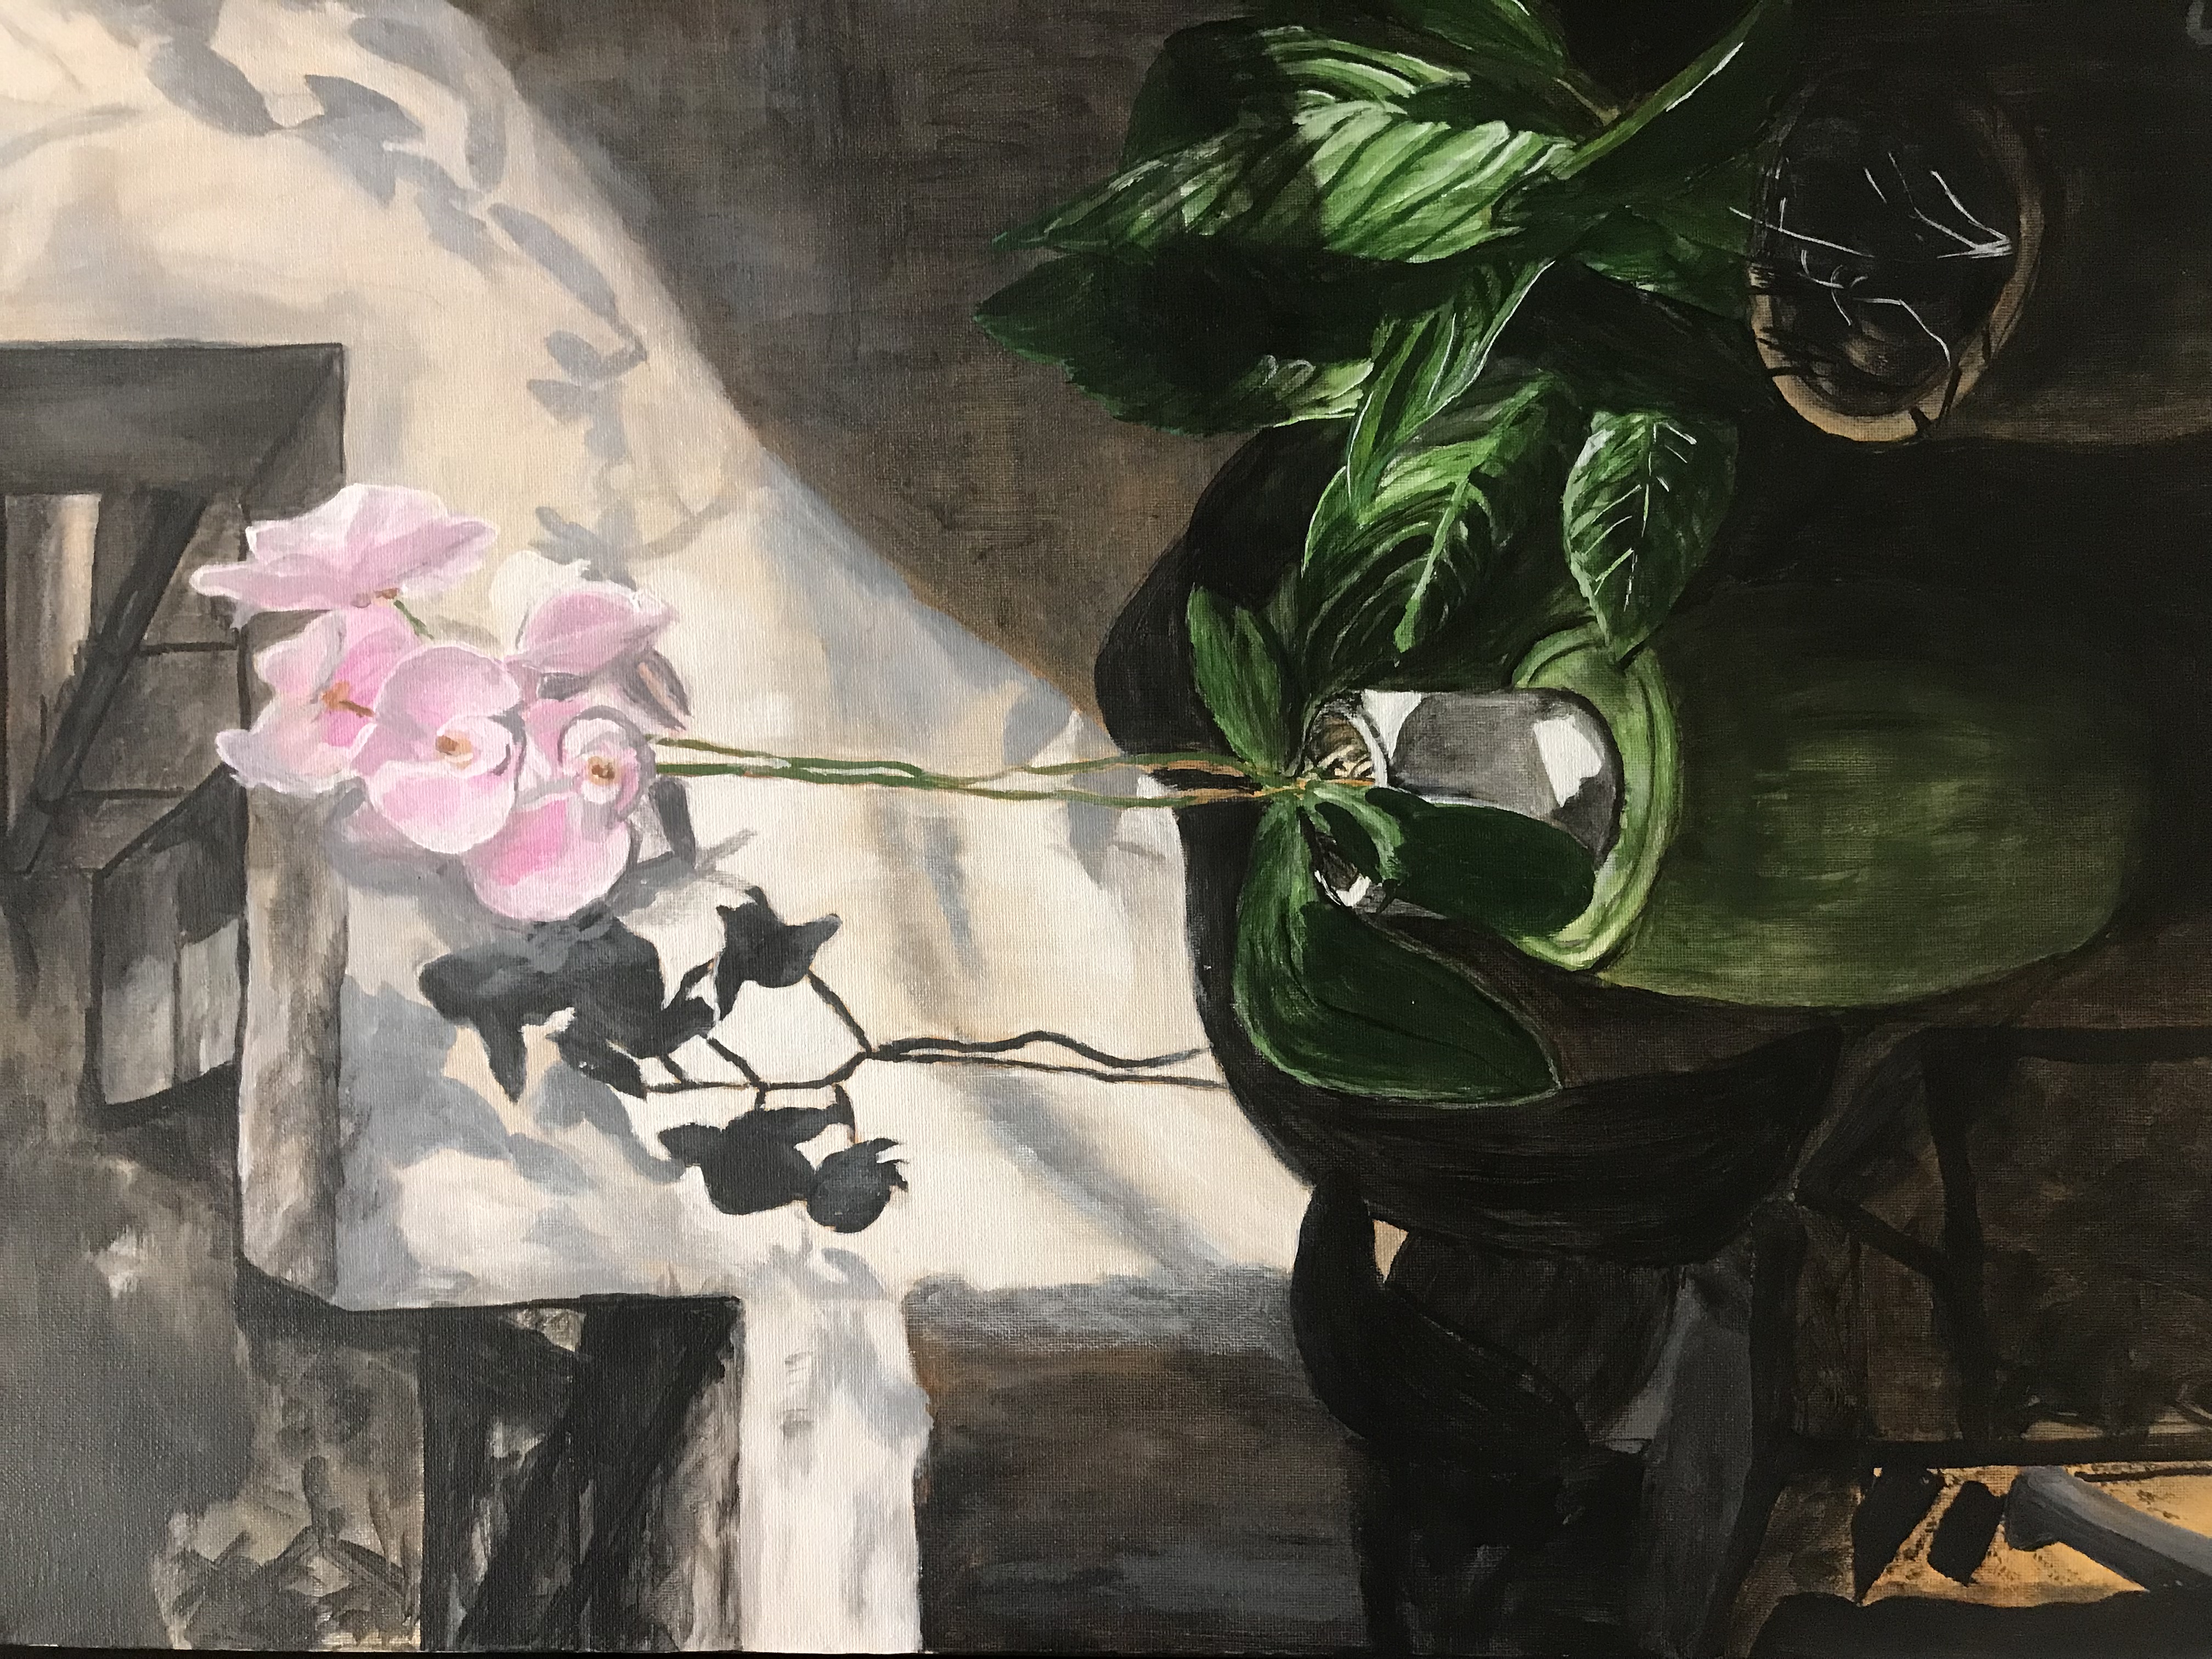 Sunlit Orchid by susan wright | Lethbridge 20000 2022 Finalists | Lethbridge Gallery